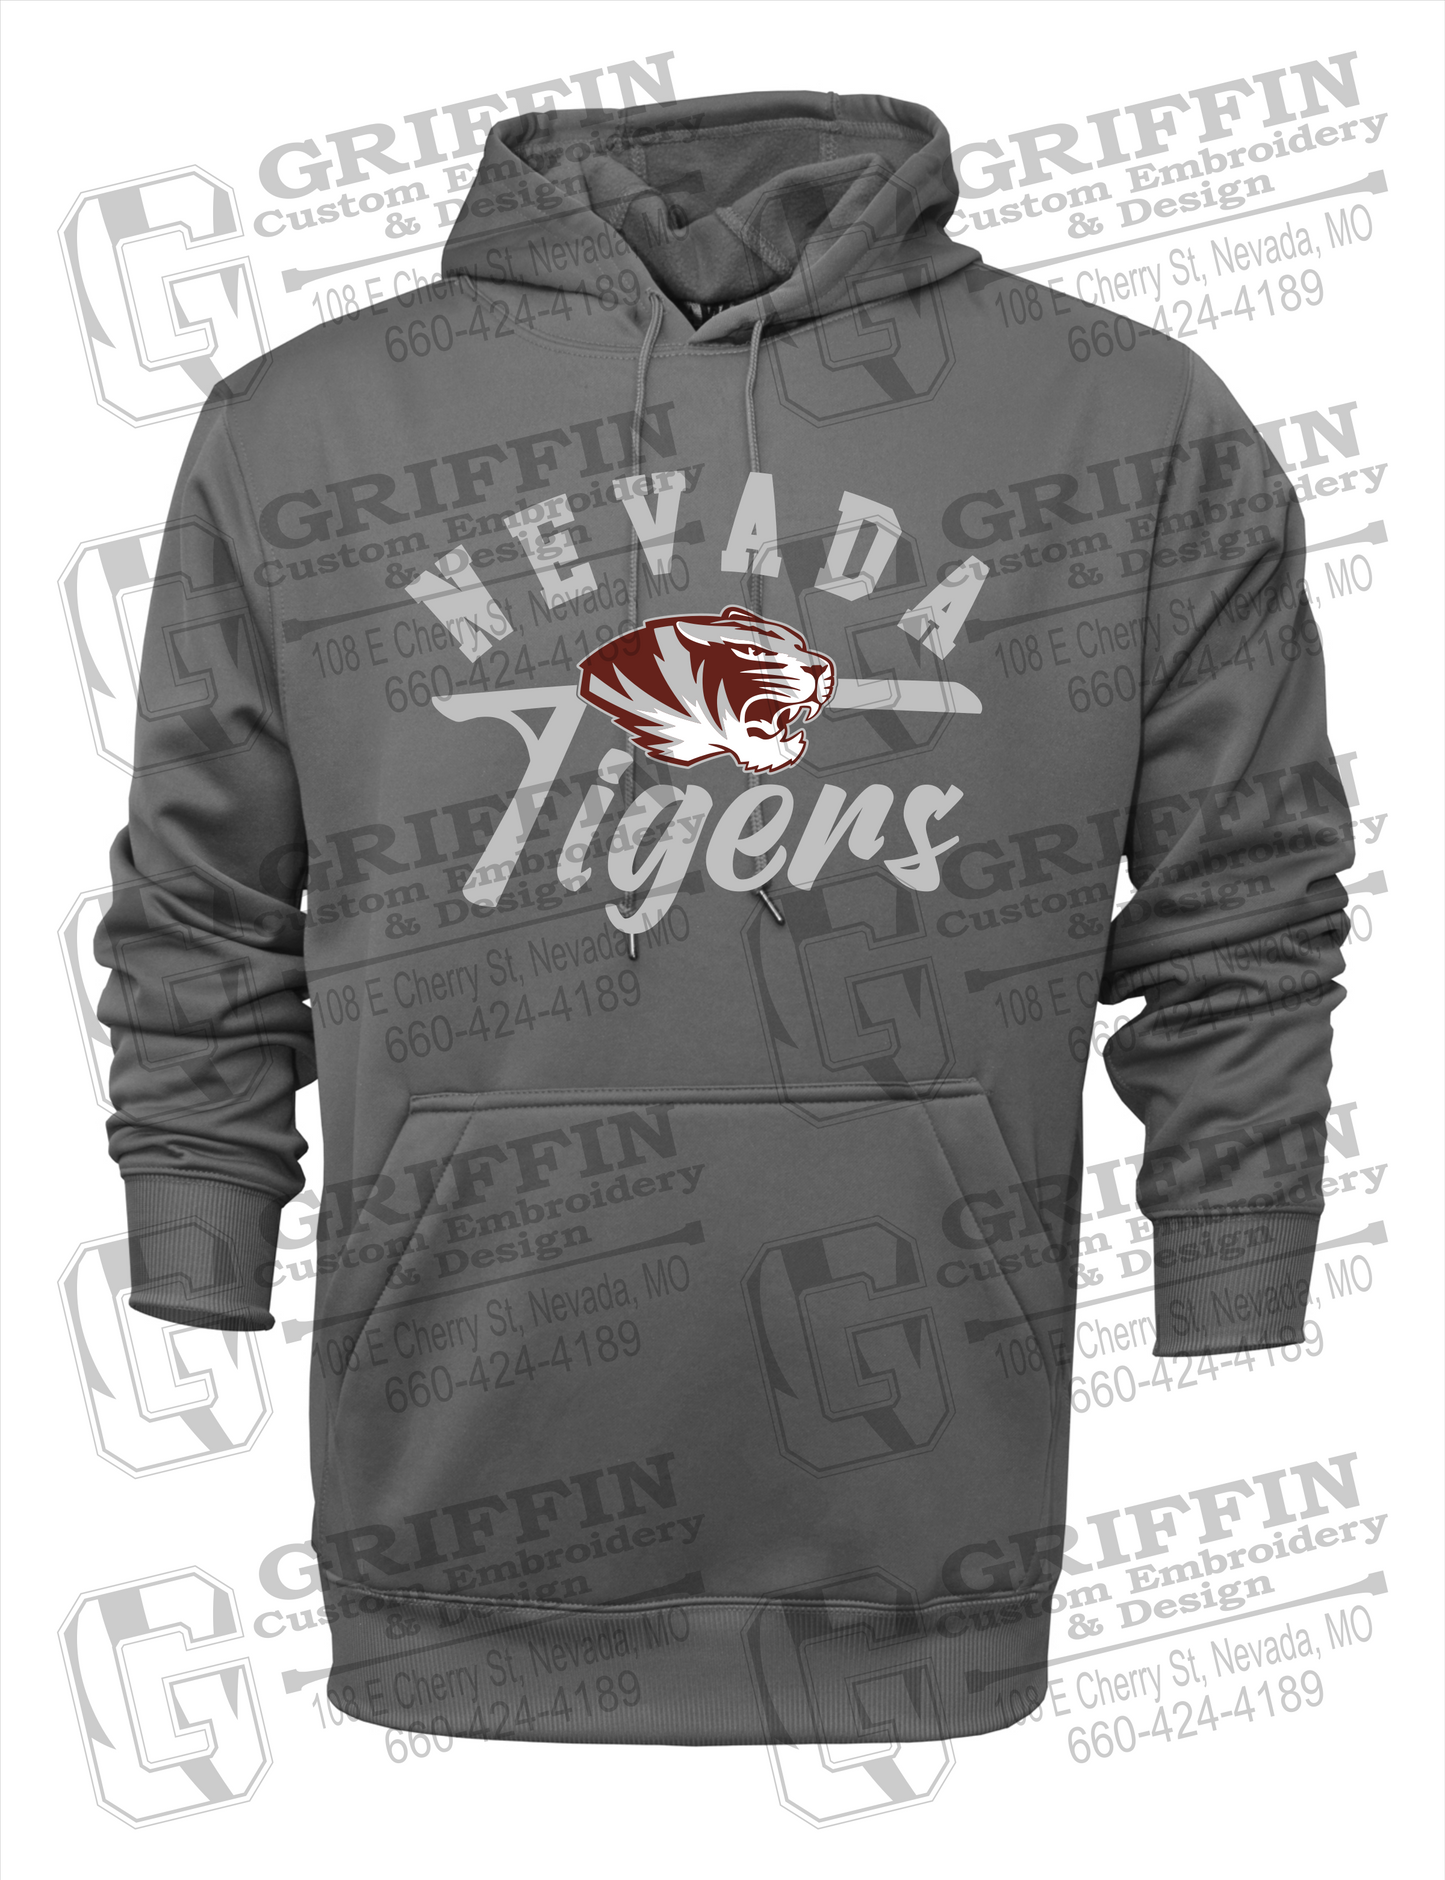 Nevada Tigers 20-Z Youth Hoodie